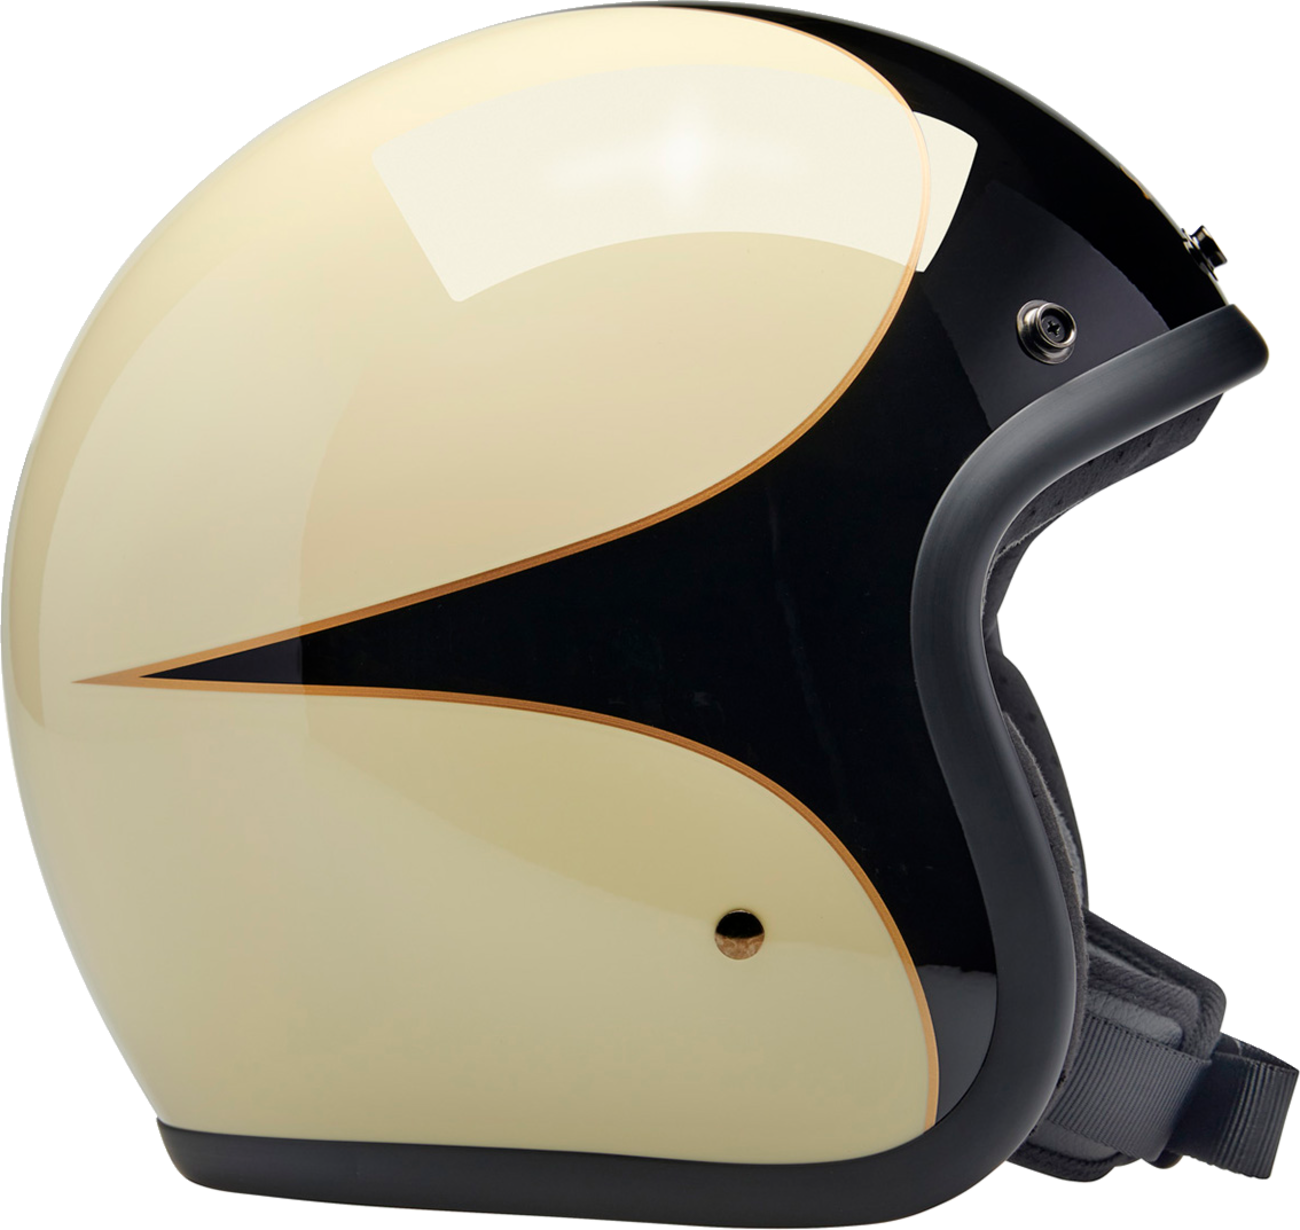 BILTWELL Bonanza Helmet - Gloss Vintage White/Black Scallop - XS 1001-559-201